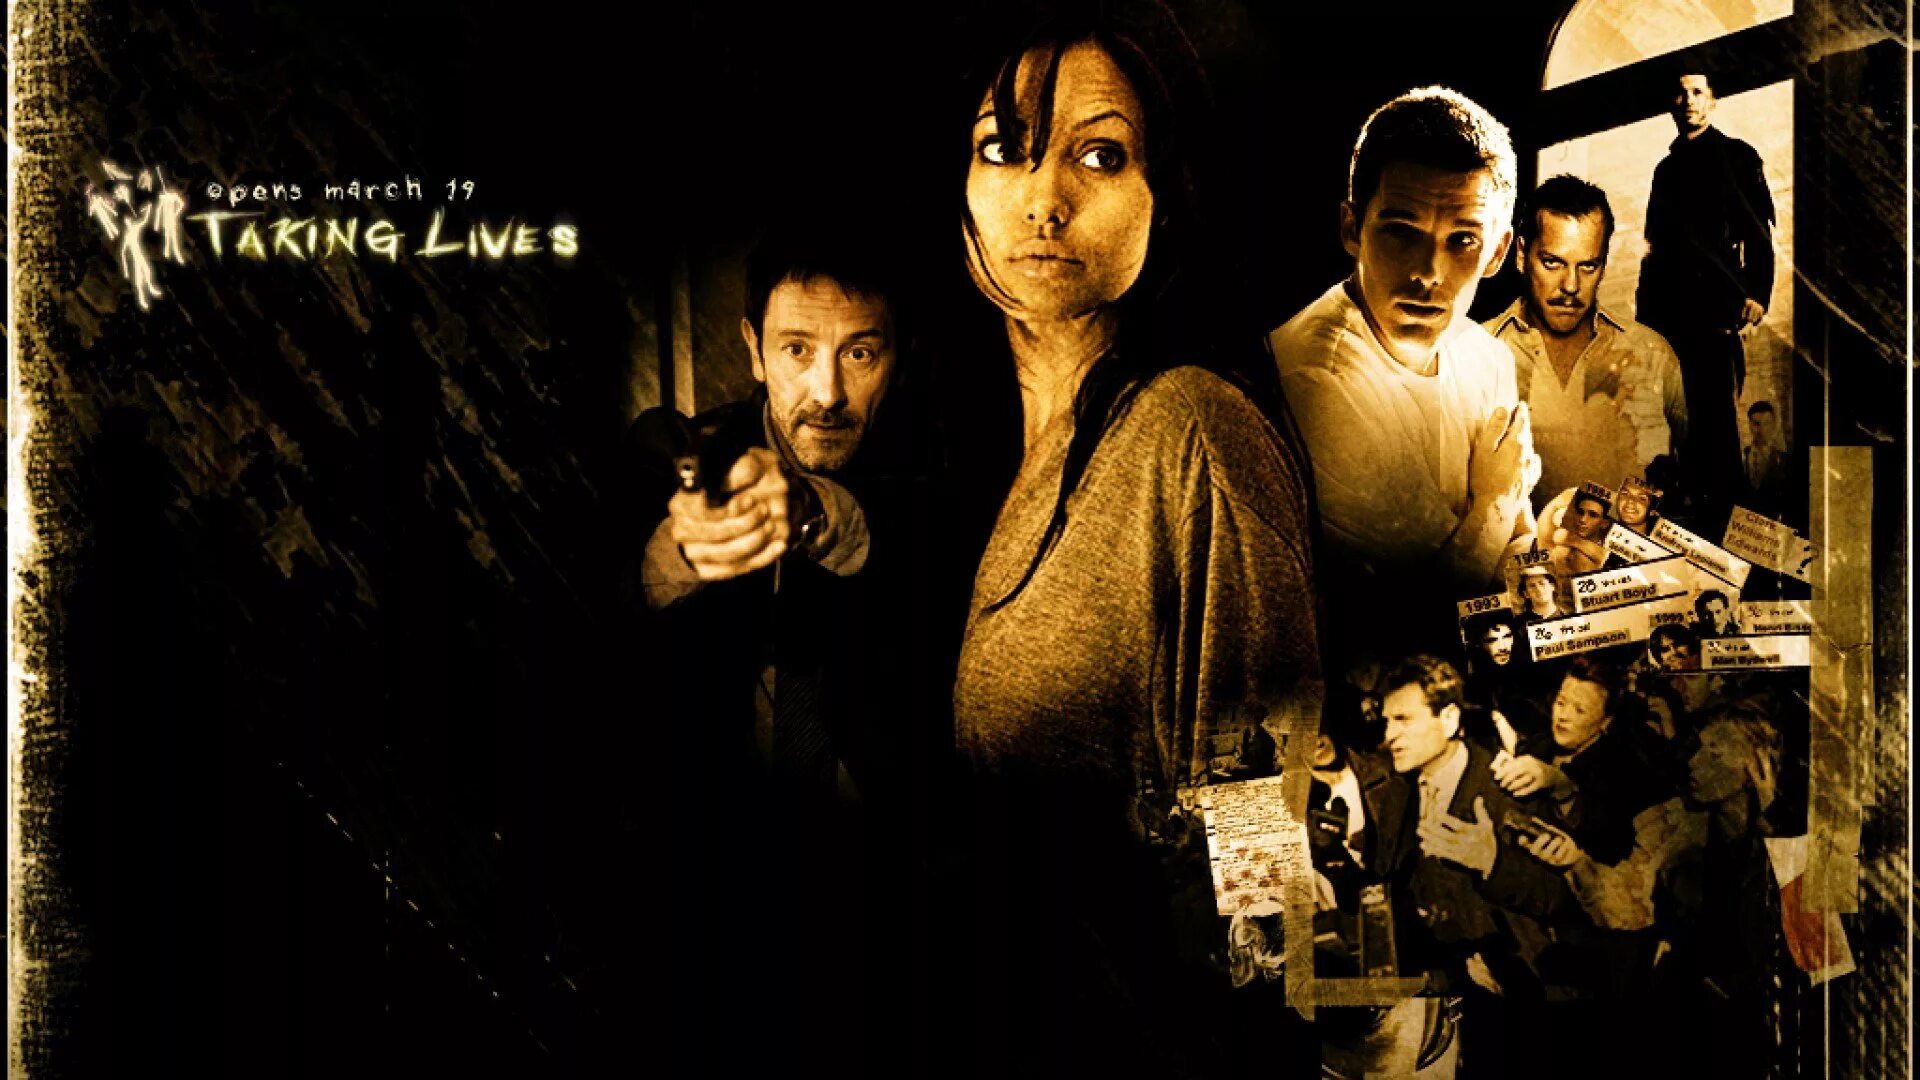 Забирая жизни 2. Забирая жизни (taking Lives), 2004. Итан Хоук забирая жизни. Анджелина Джоли забирая жизни.